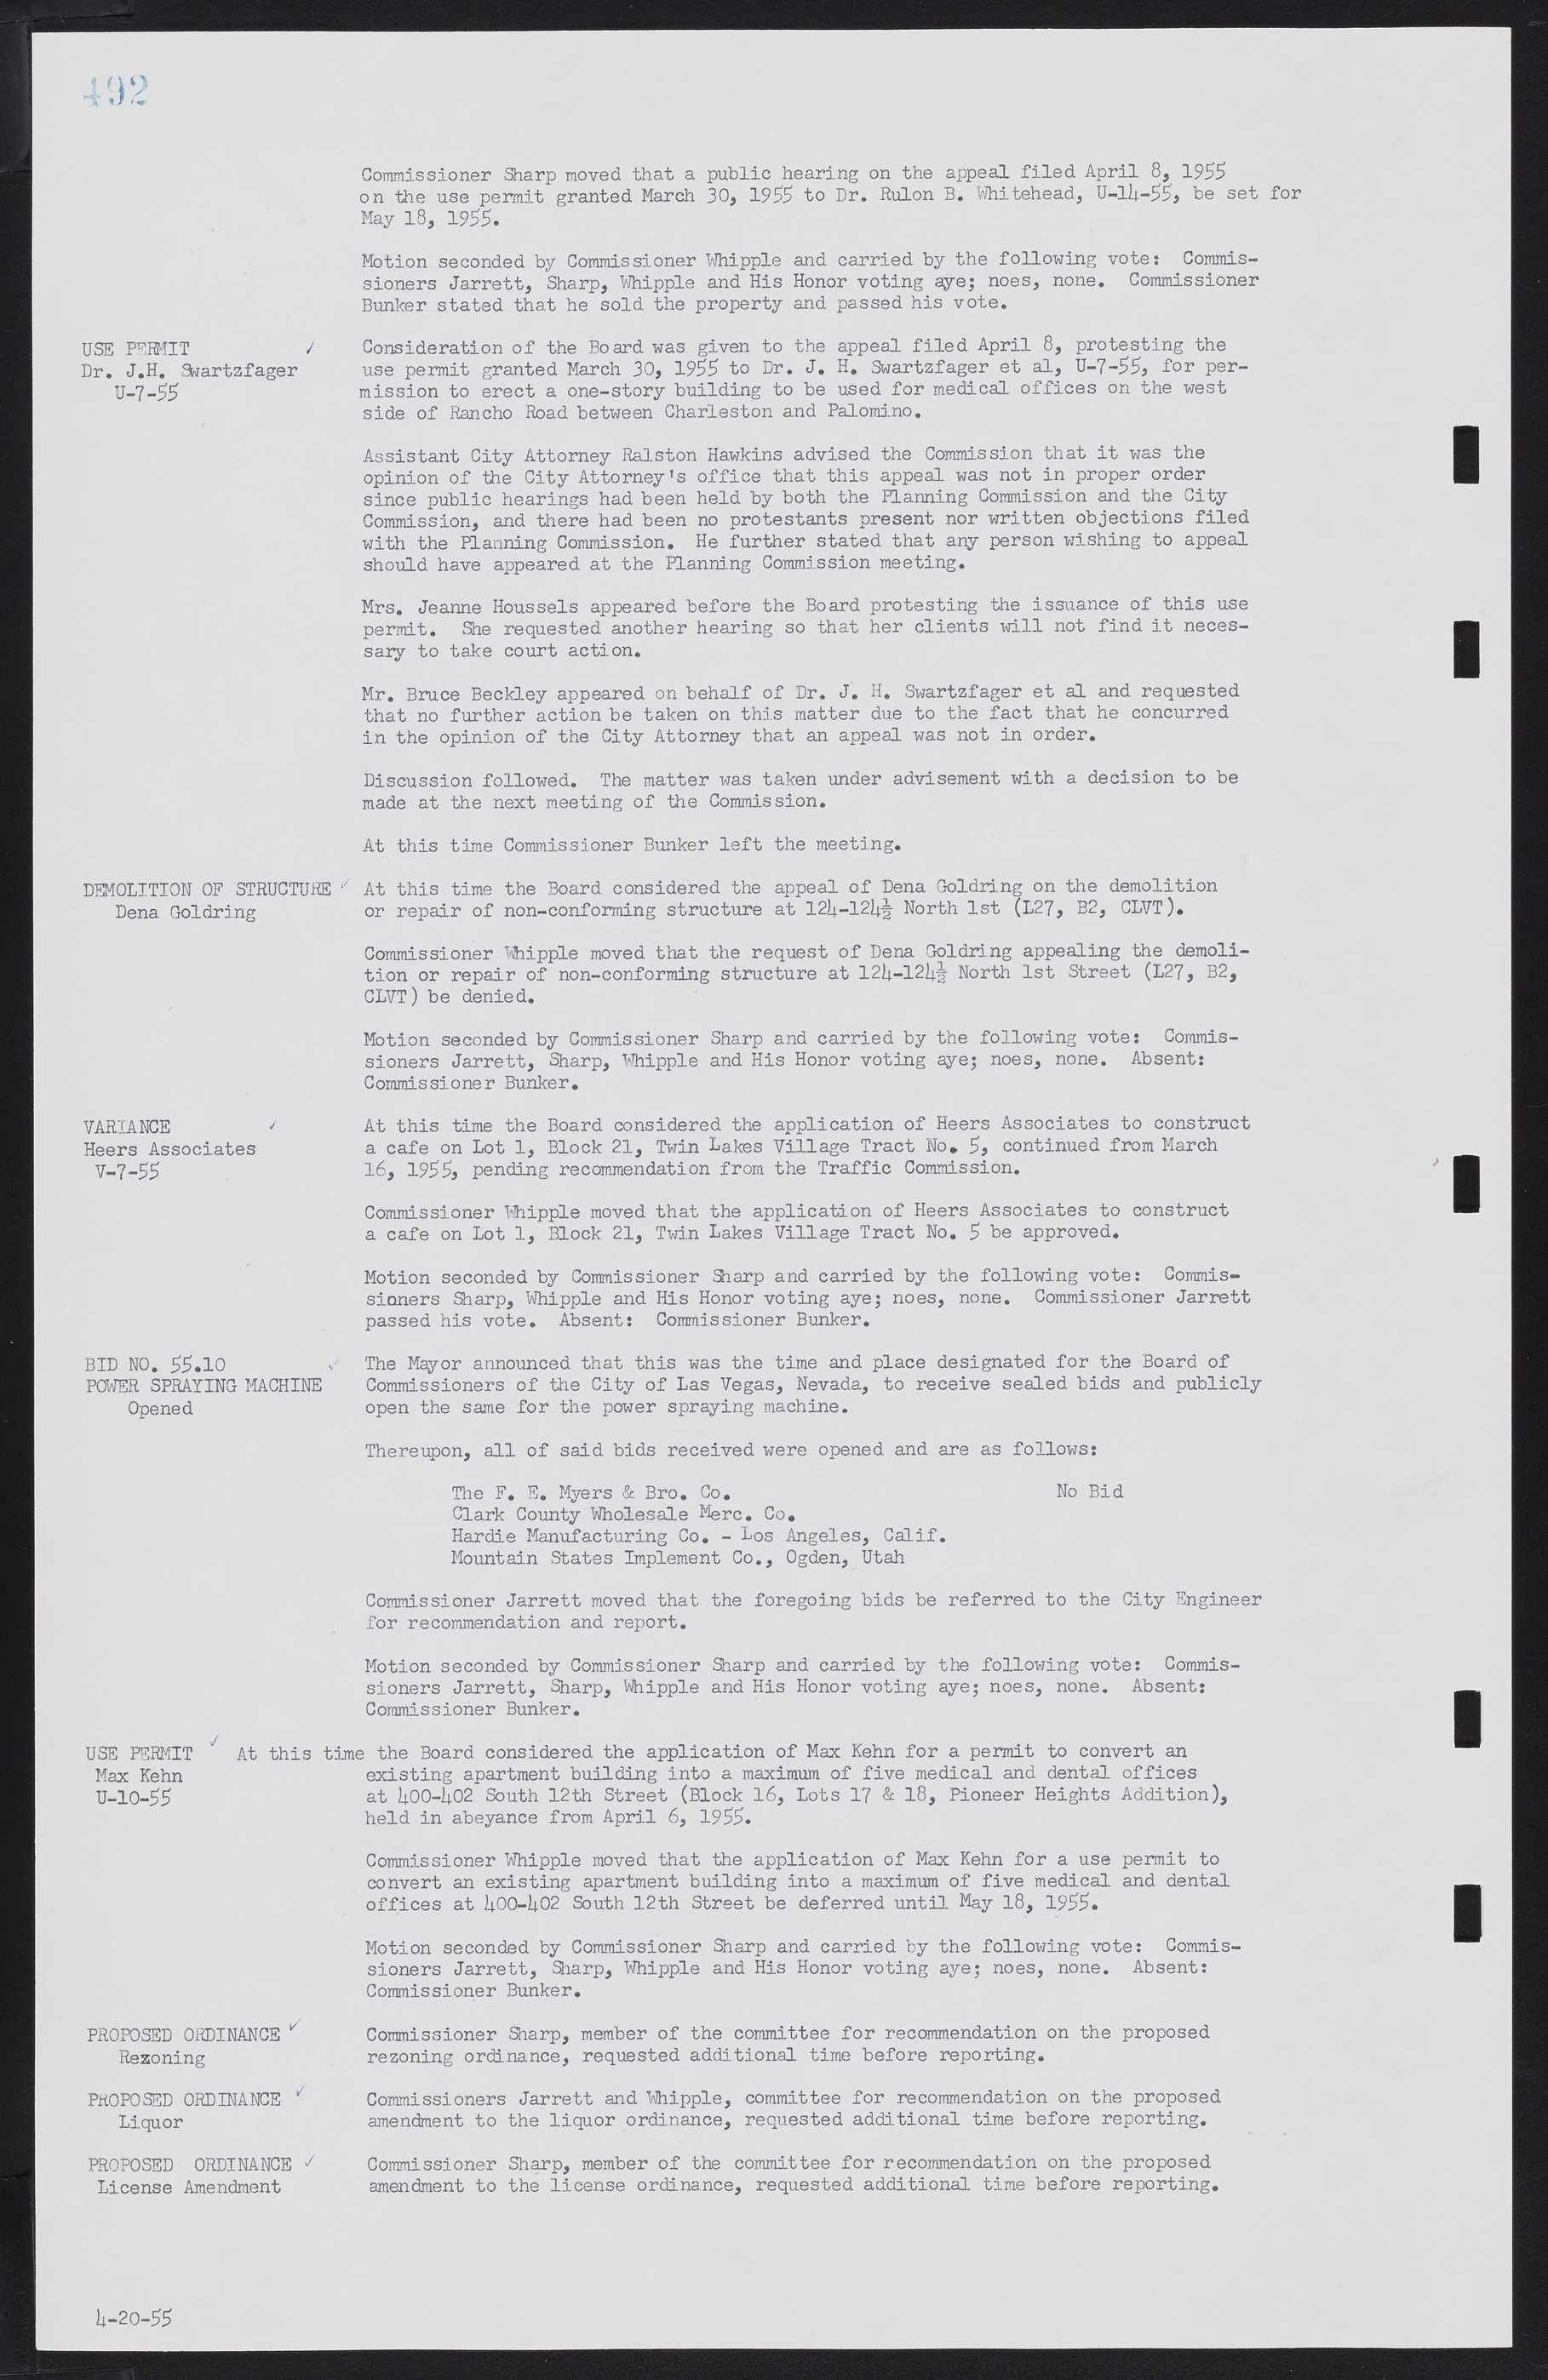 Las Vegas City Commission Minutes, February 17, 1954 to September 21, 1955, lvc000009-498